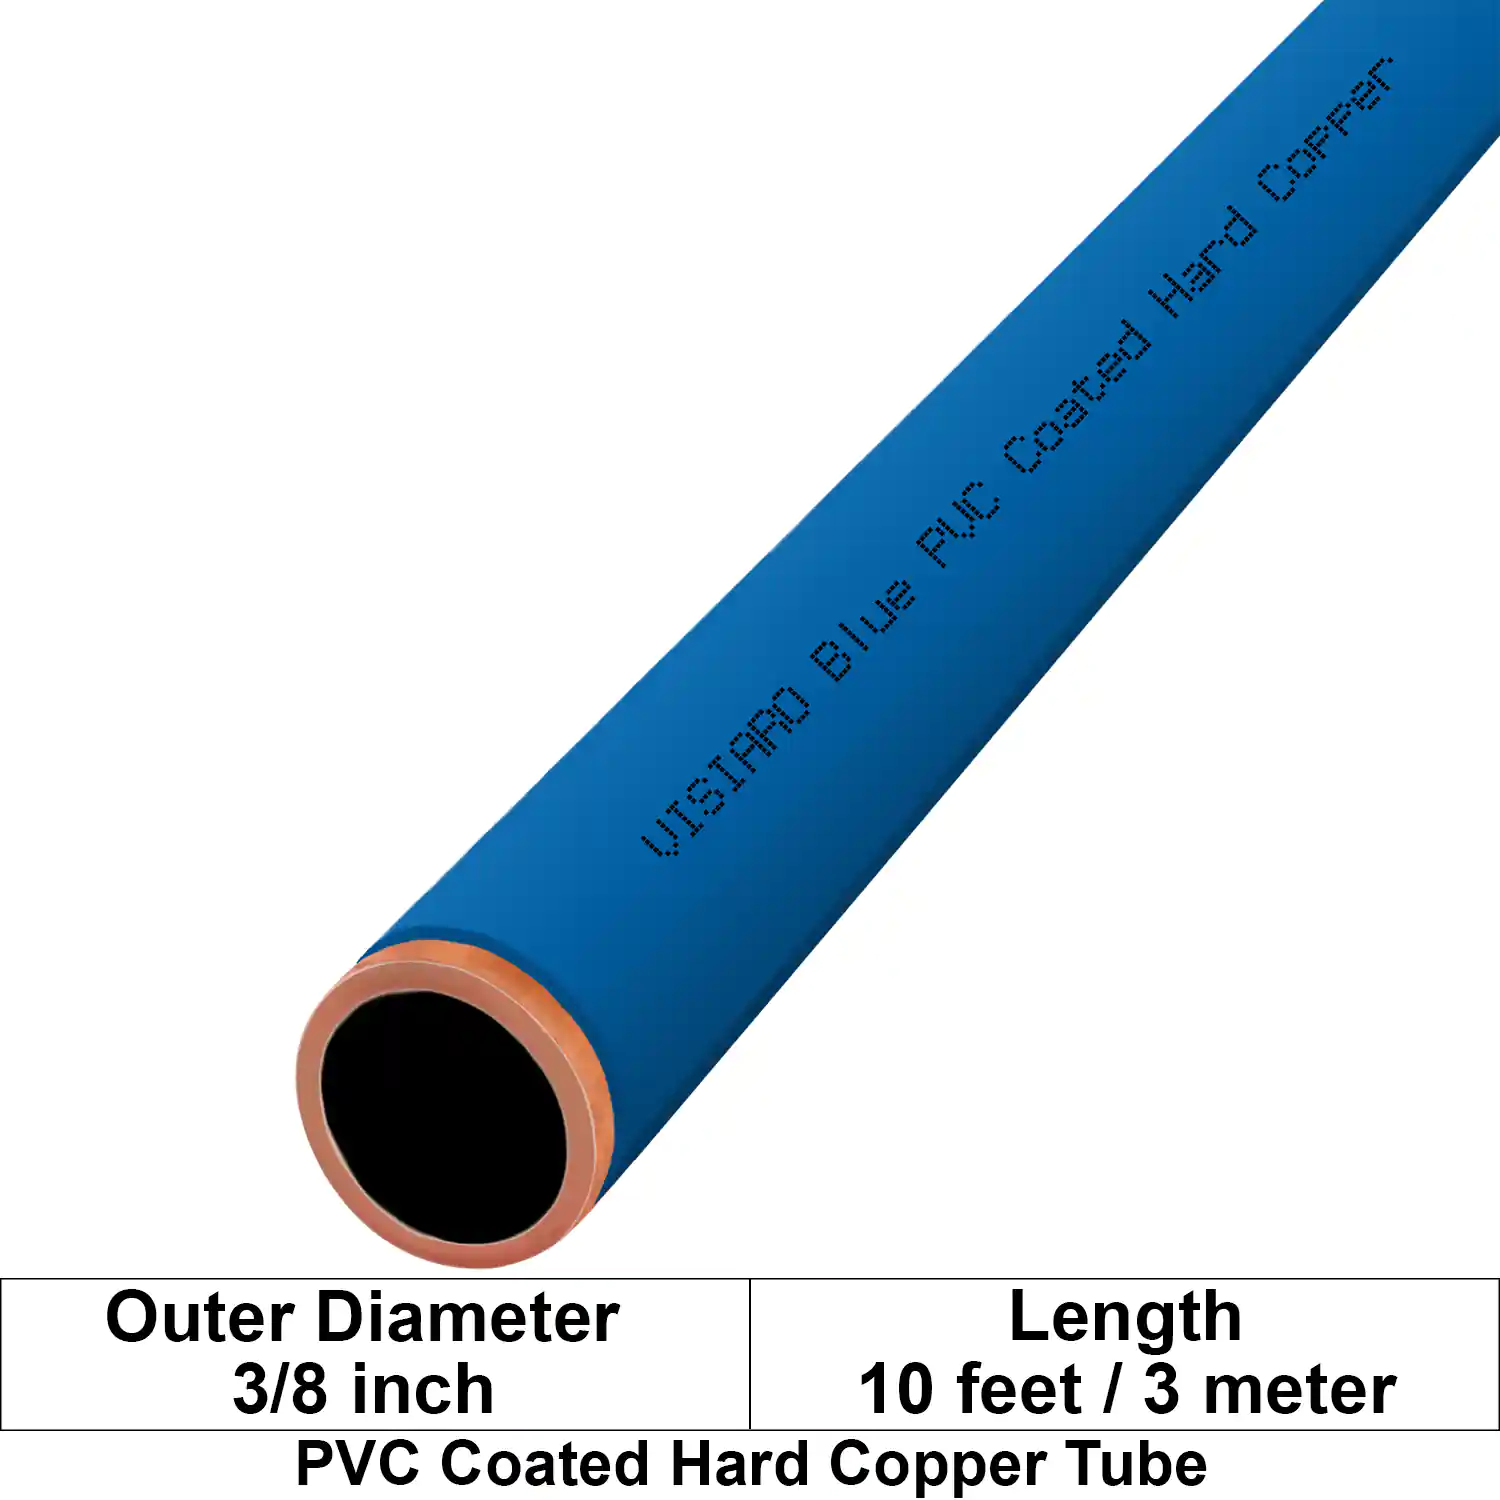 Visiaro Blue PVC Coated Hard Copper Tube 10ft long Outer Diameter - 3/8 inch